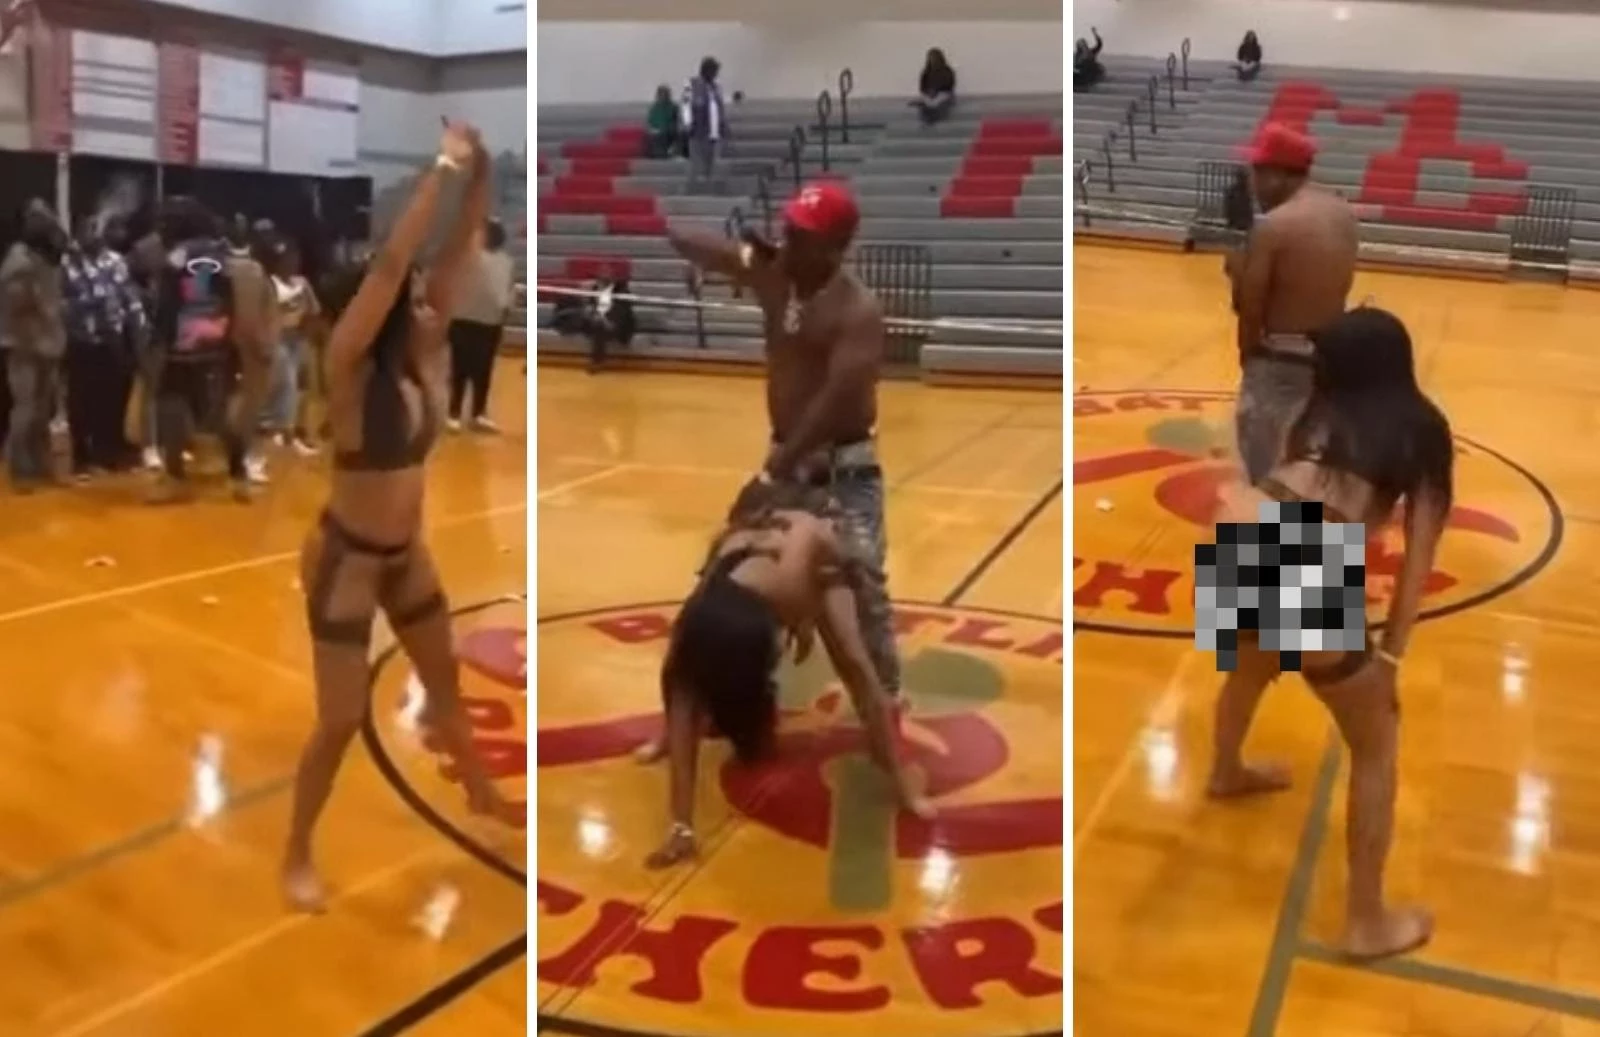 How Did This Happen? A Stripper Danced Inside A Michigan High School